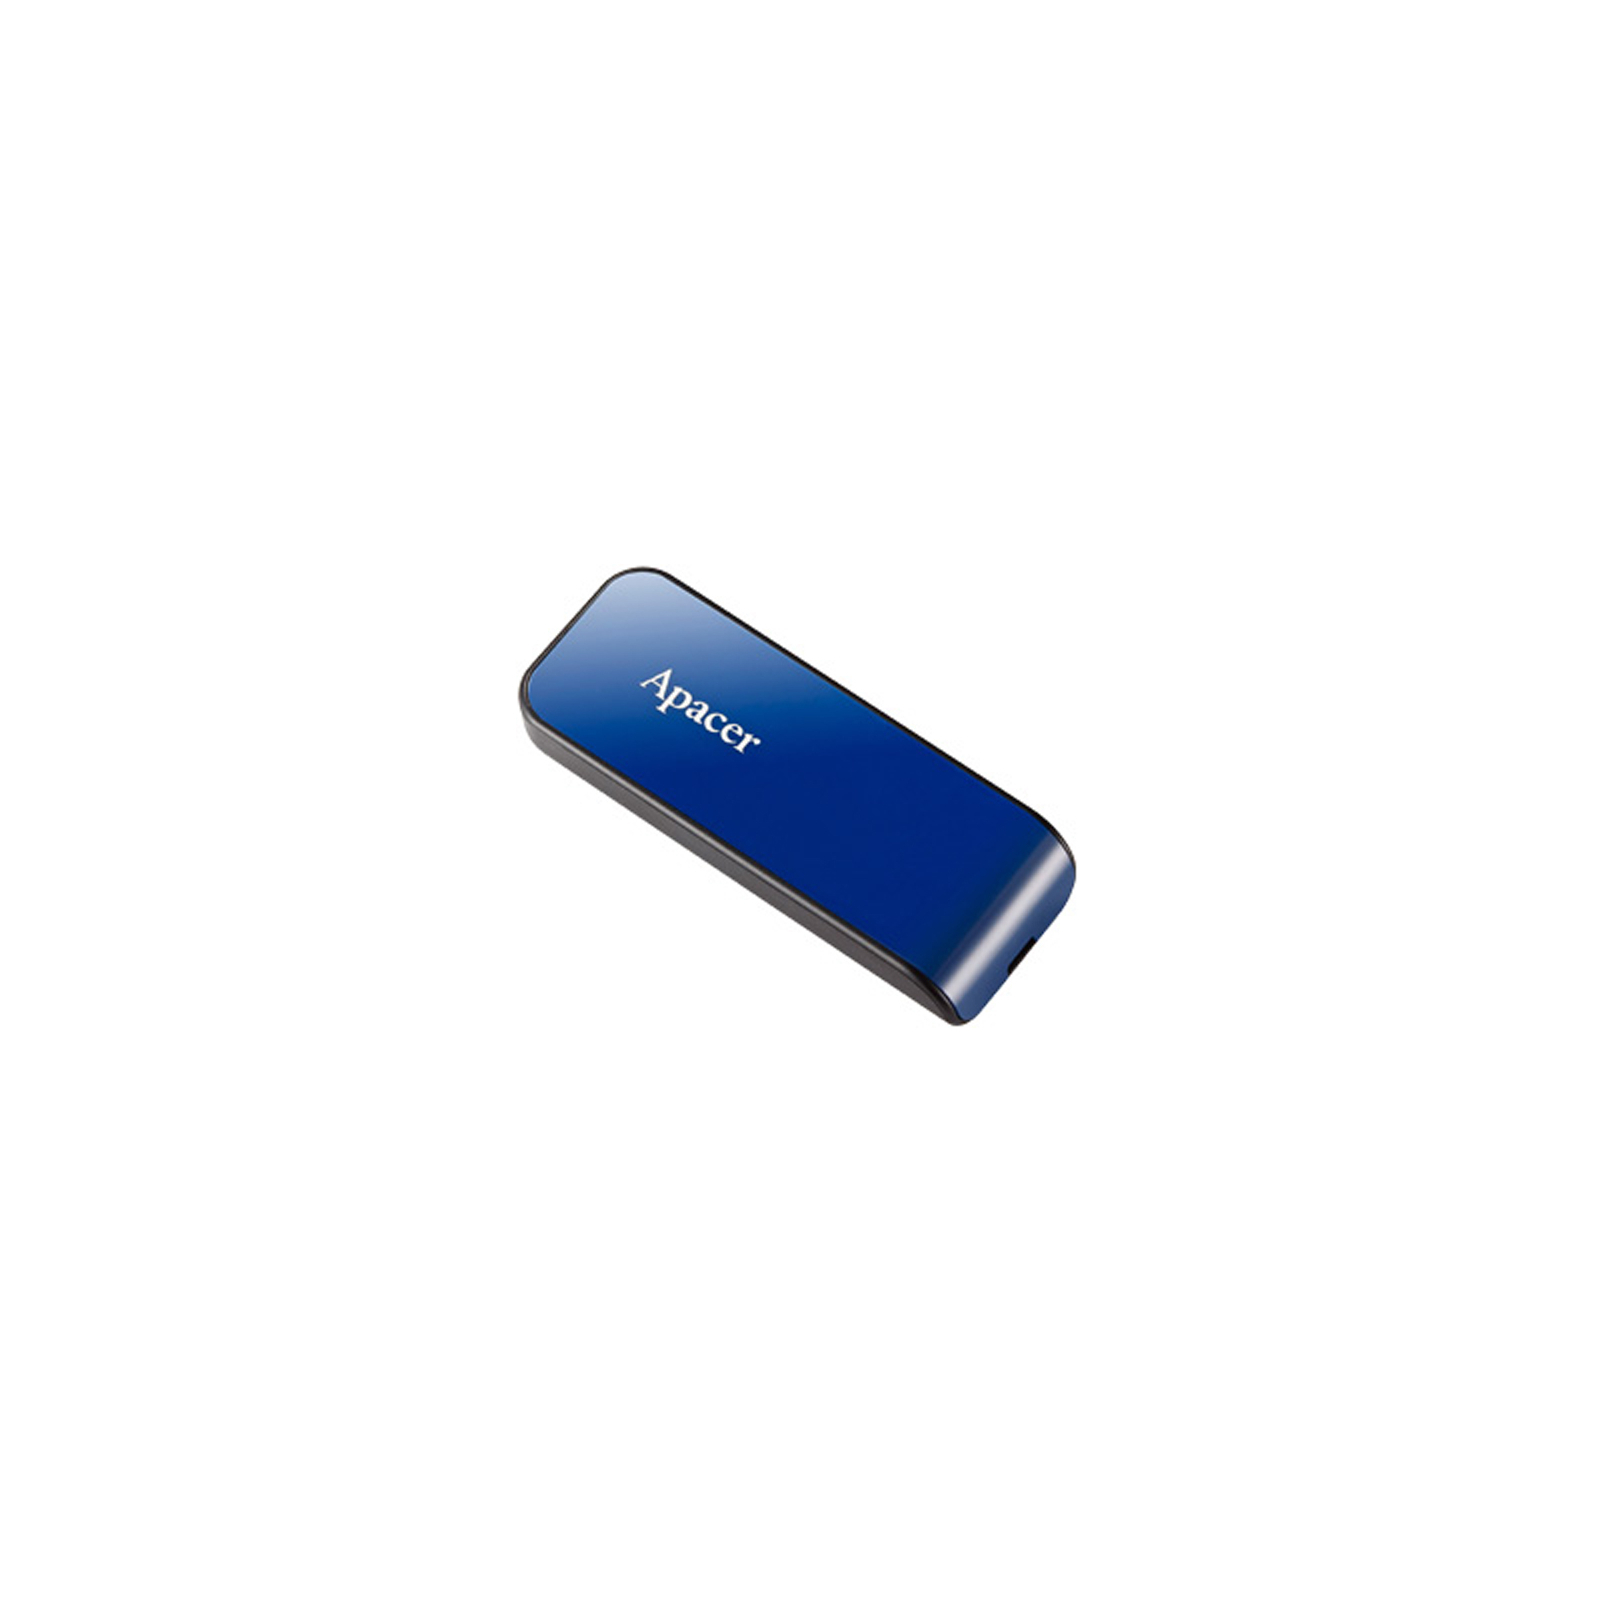 USB флеш накопитель Apacer 8GB AH334 blue USB 2.0 (AP8GAH334U-1) изображение 2